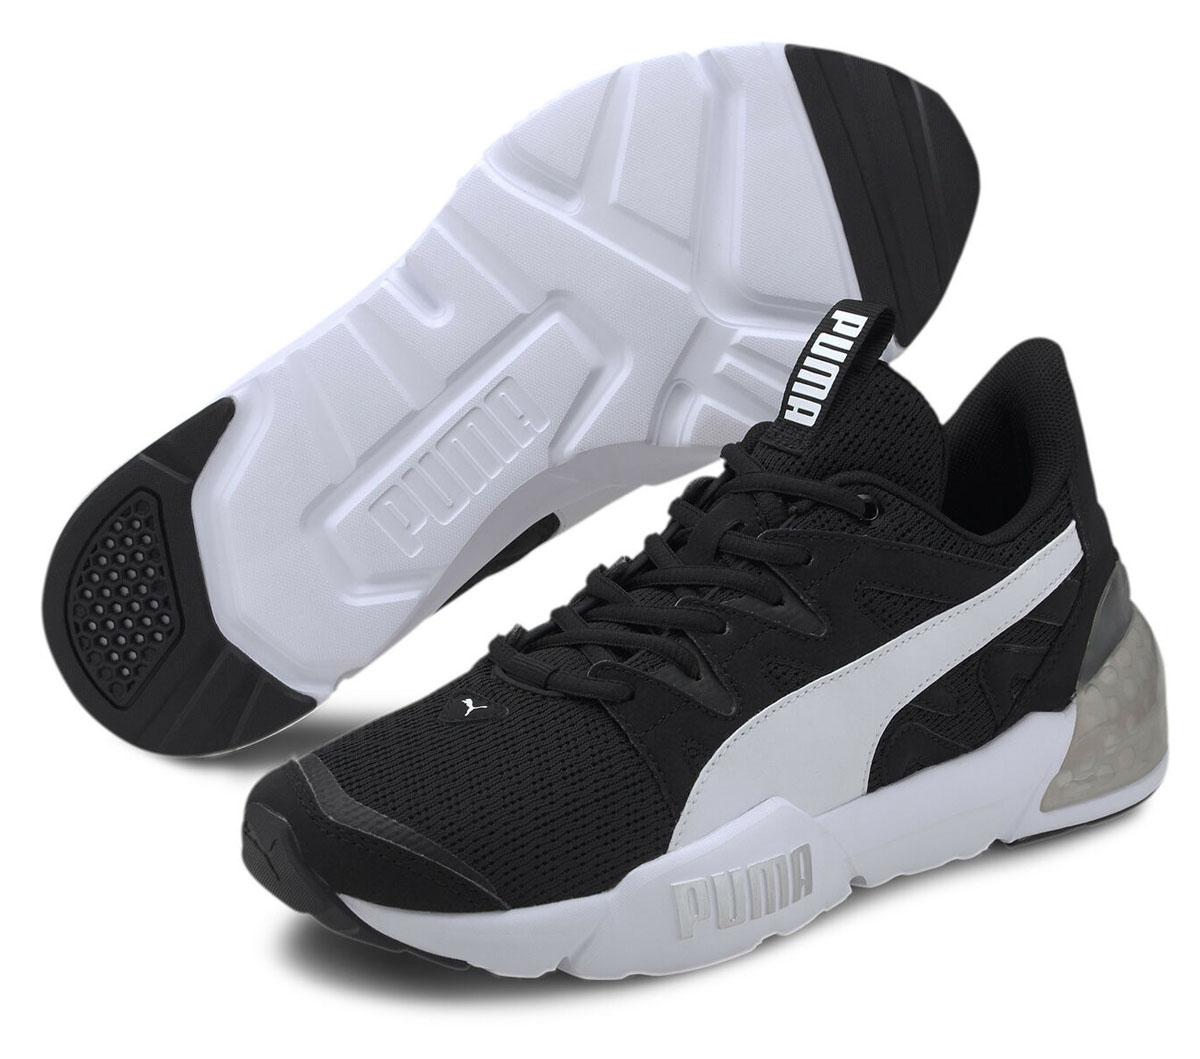 Puma Mens Cell Pharos Training Shoes for $34.99 Shipped